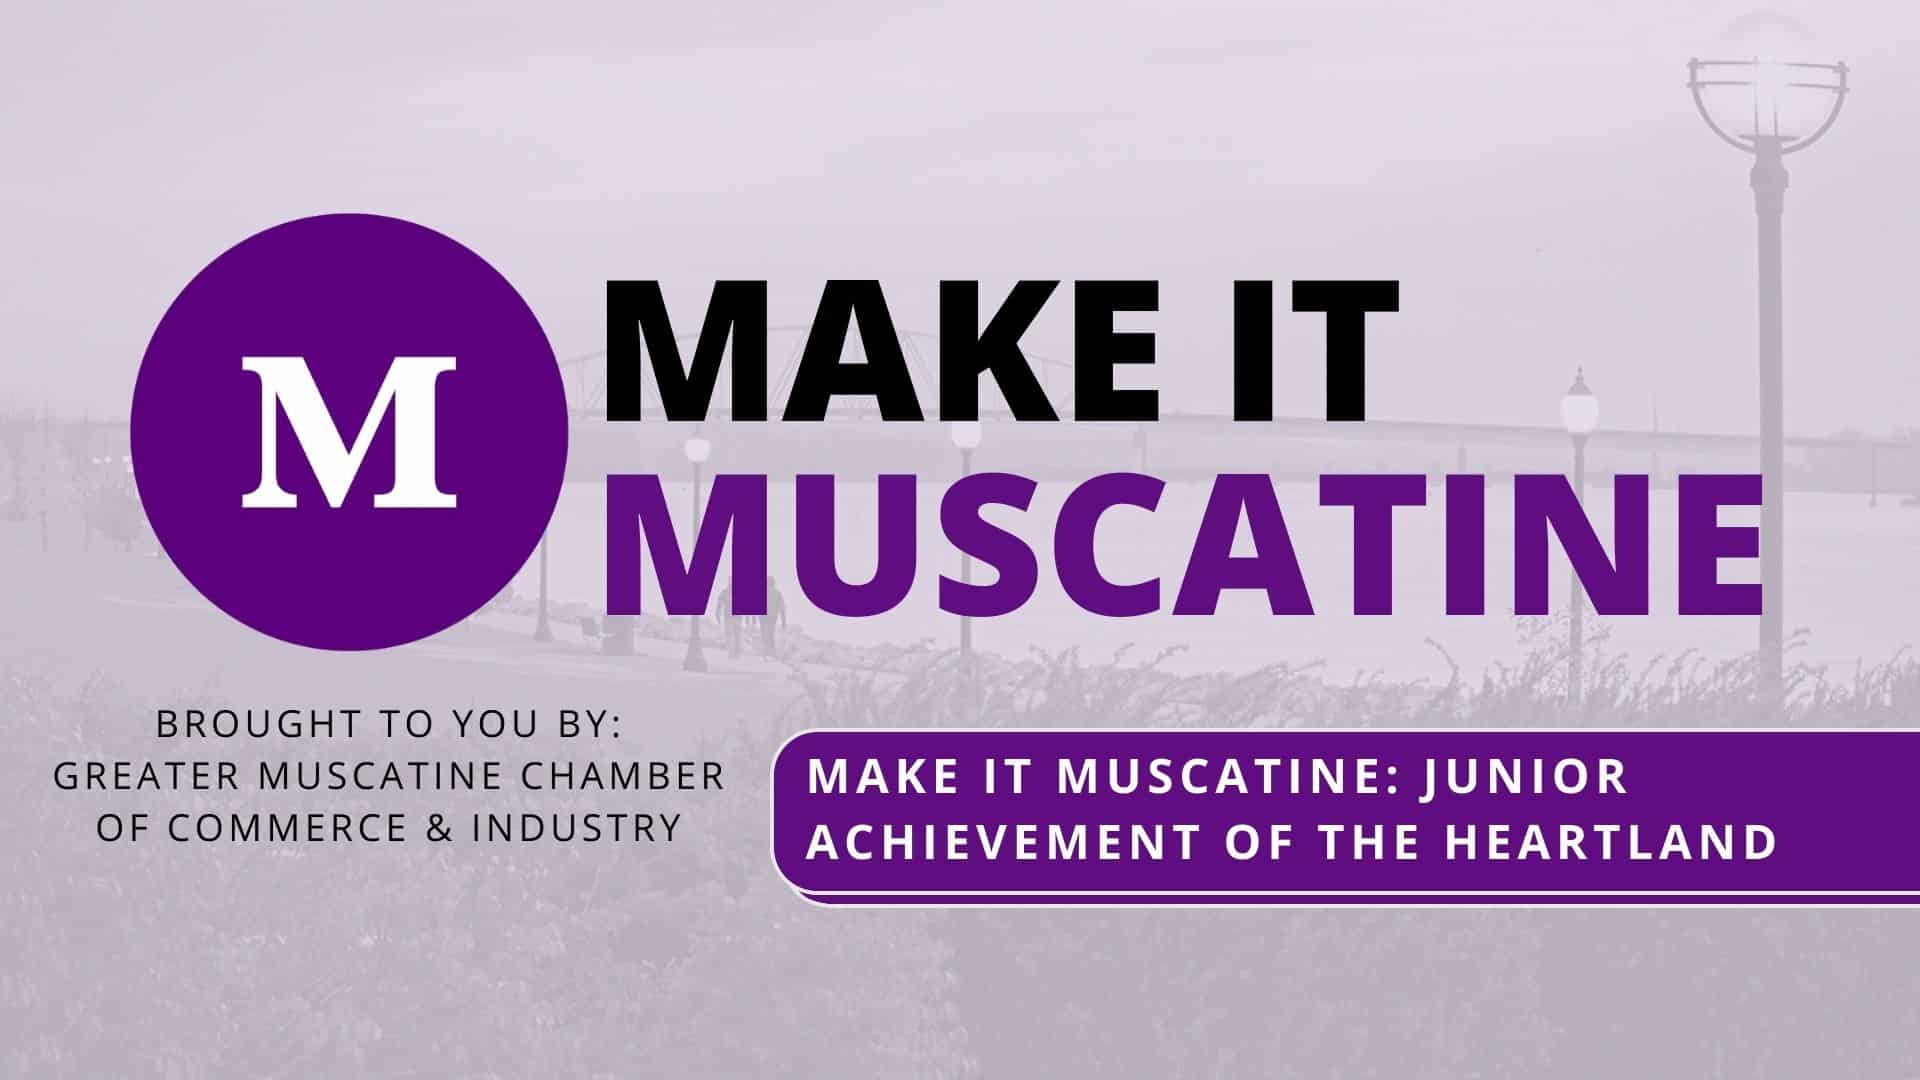 Make it Muscatine: Junior Achievement of the Heartland